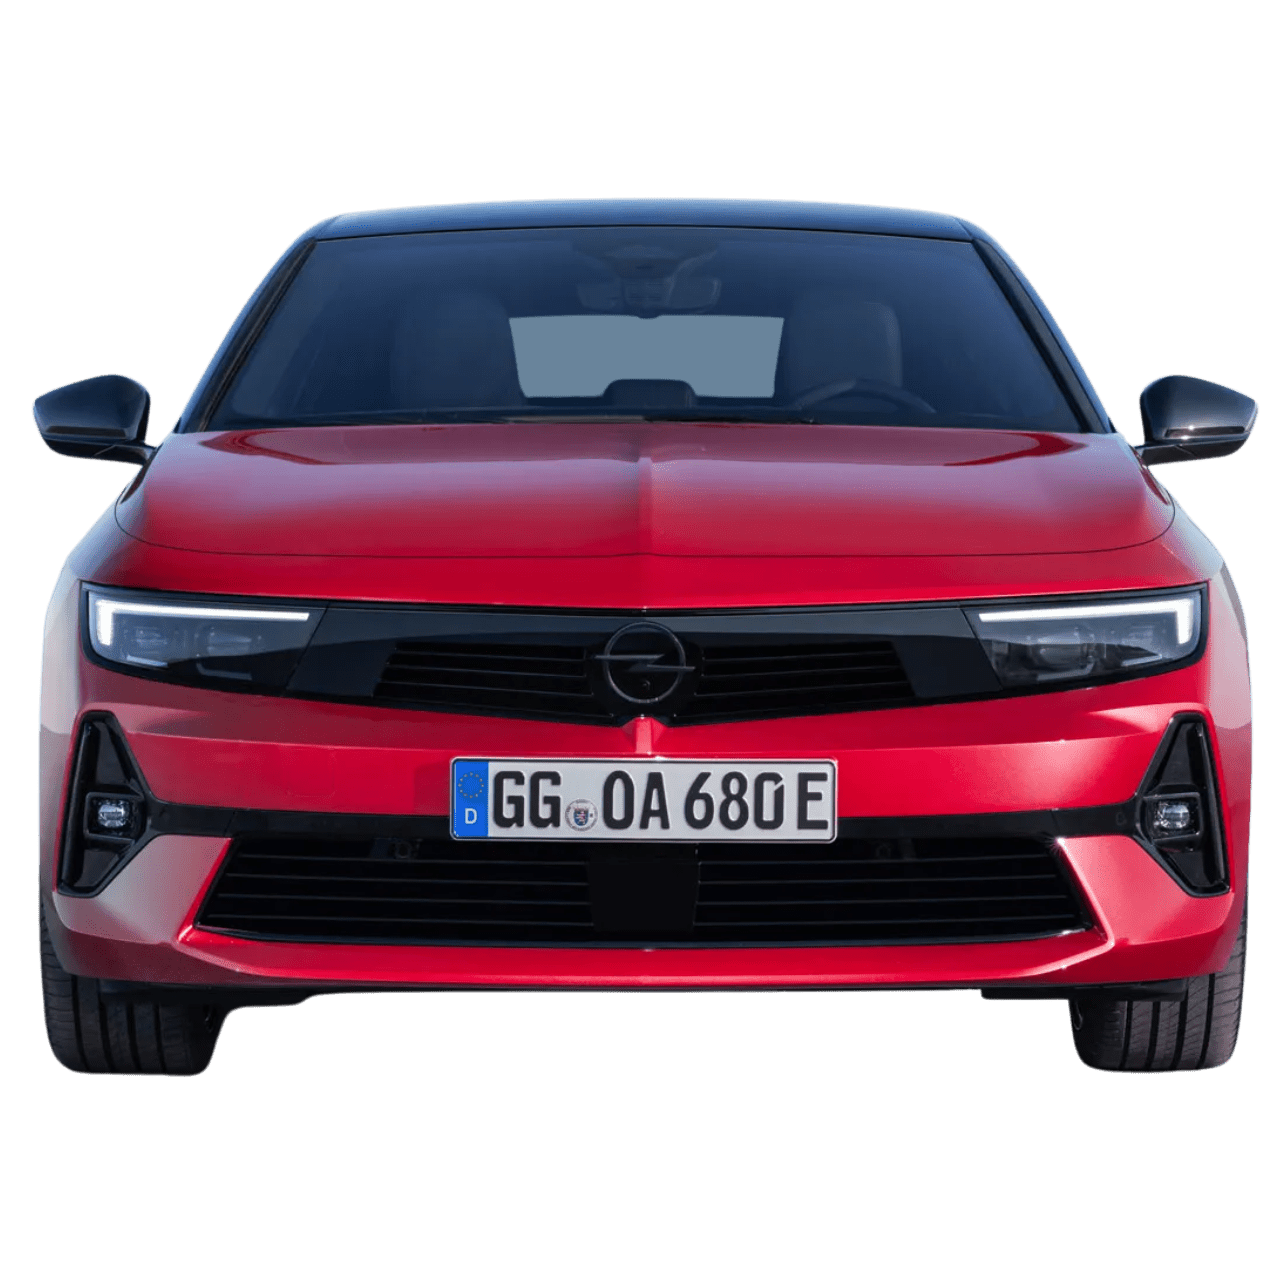 Essai : Opel Astra Electric, solidité allemande (2024) - AutoScout24